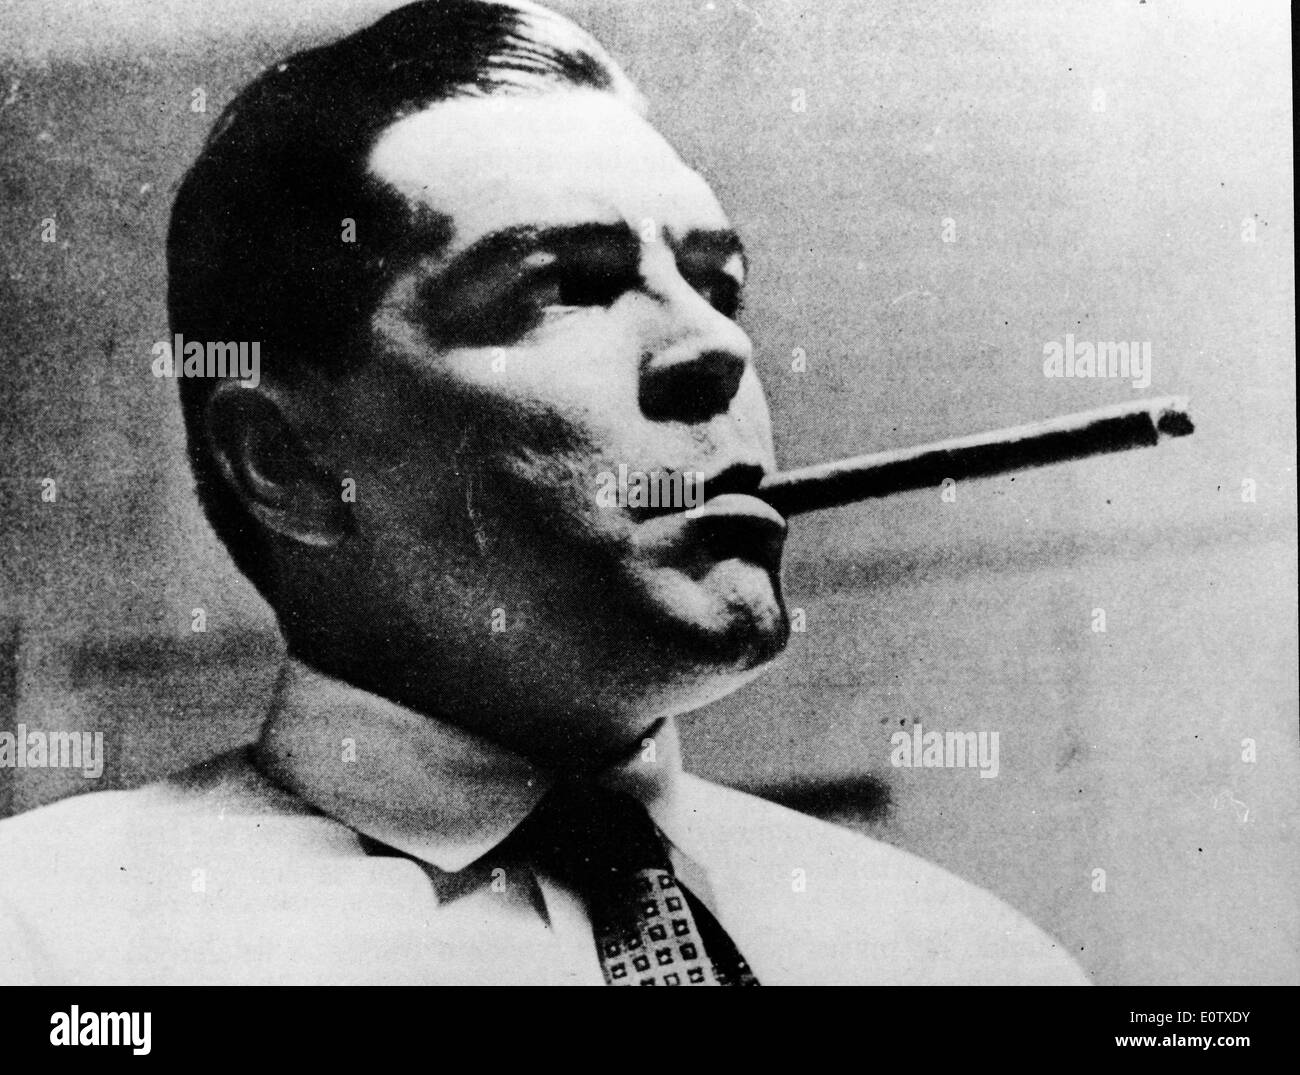 Rivoluzionario Cubano Che Guevara di fumare un sigaro Foto Stock